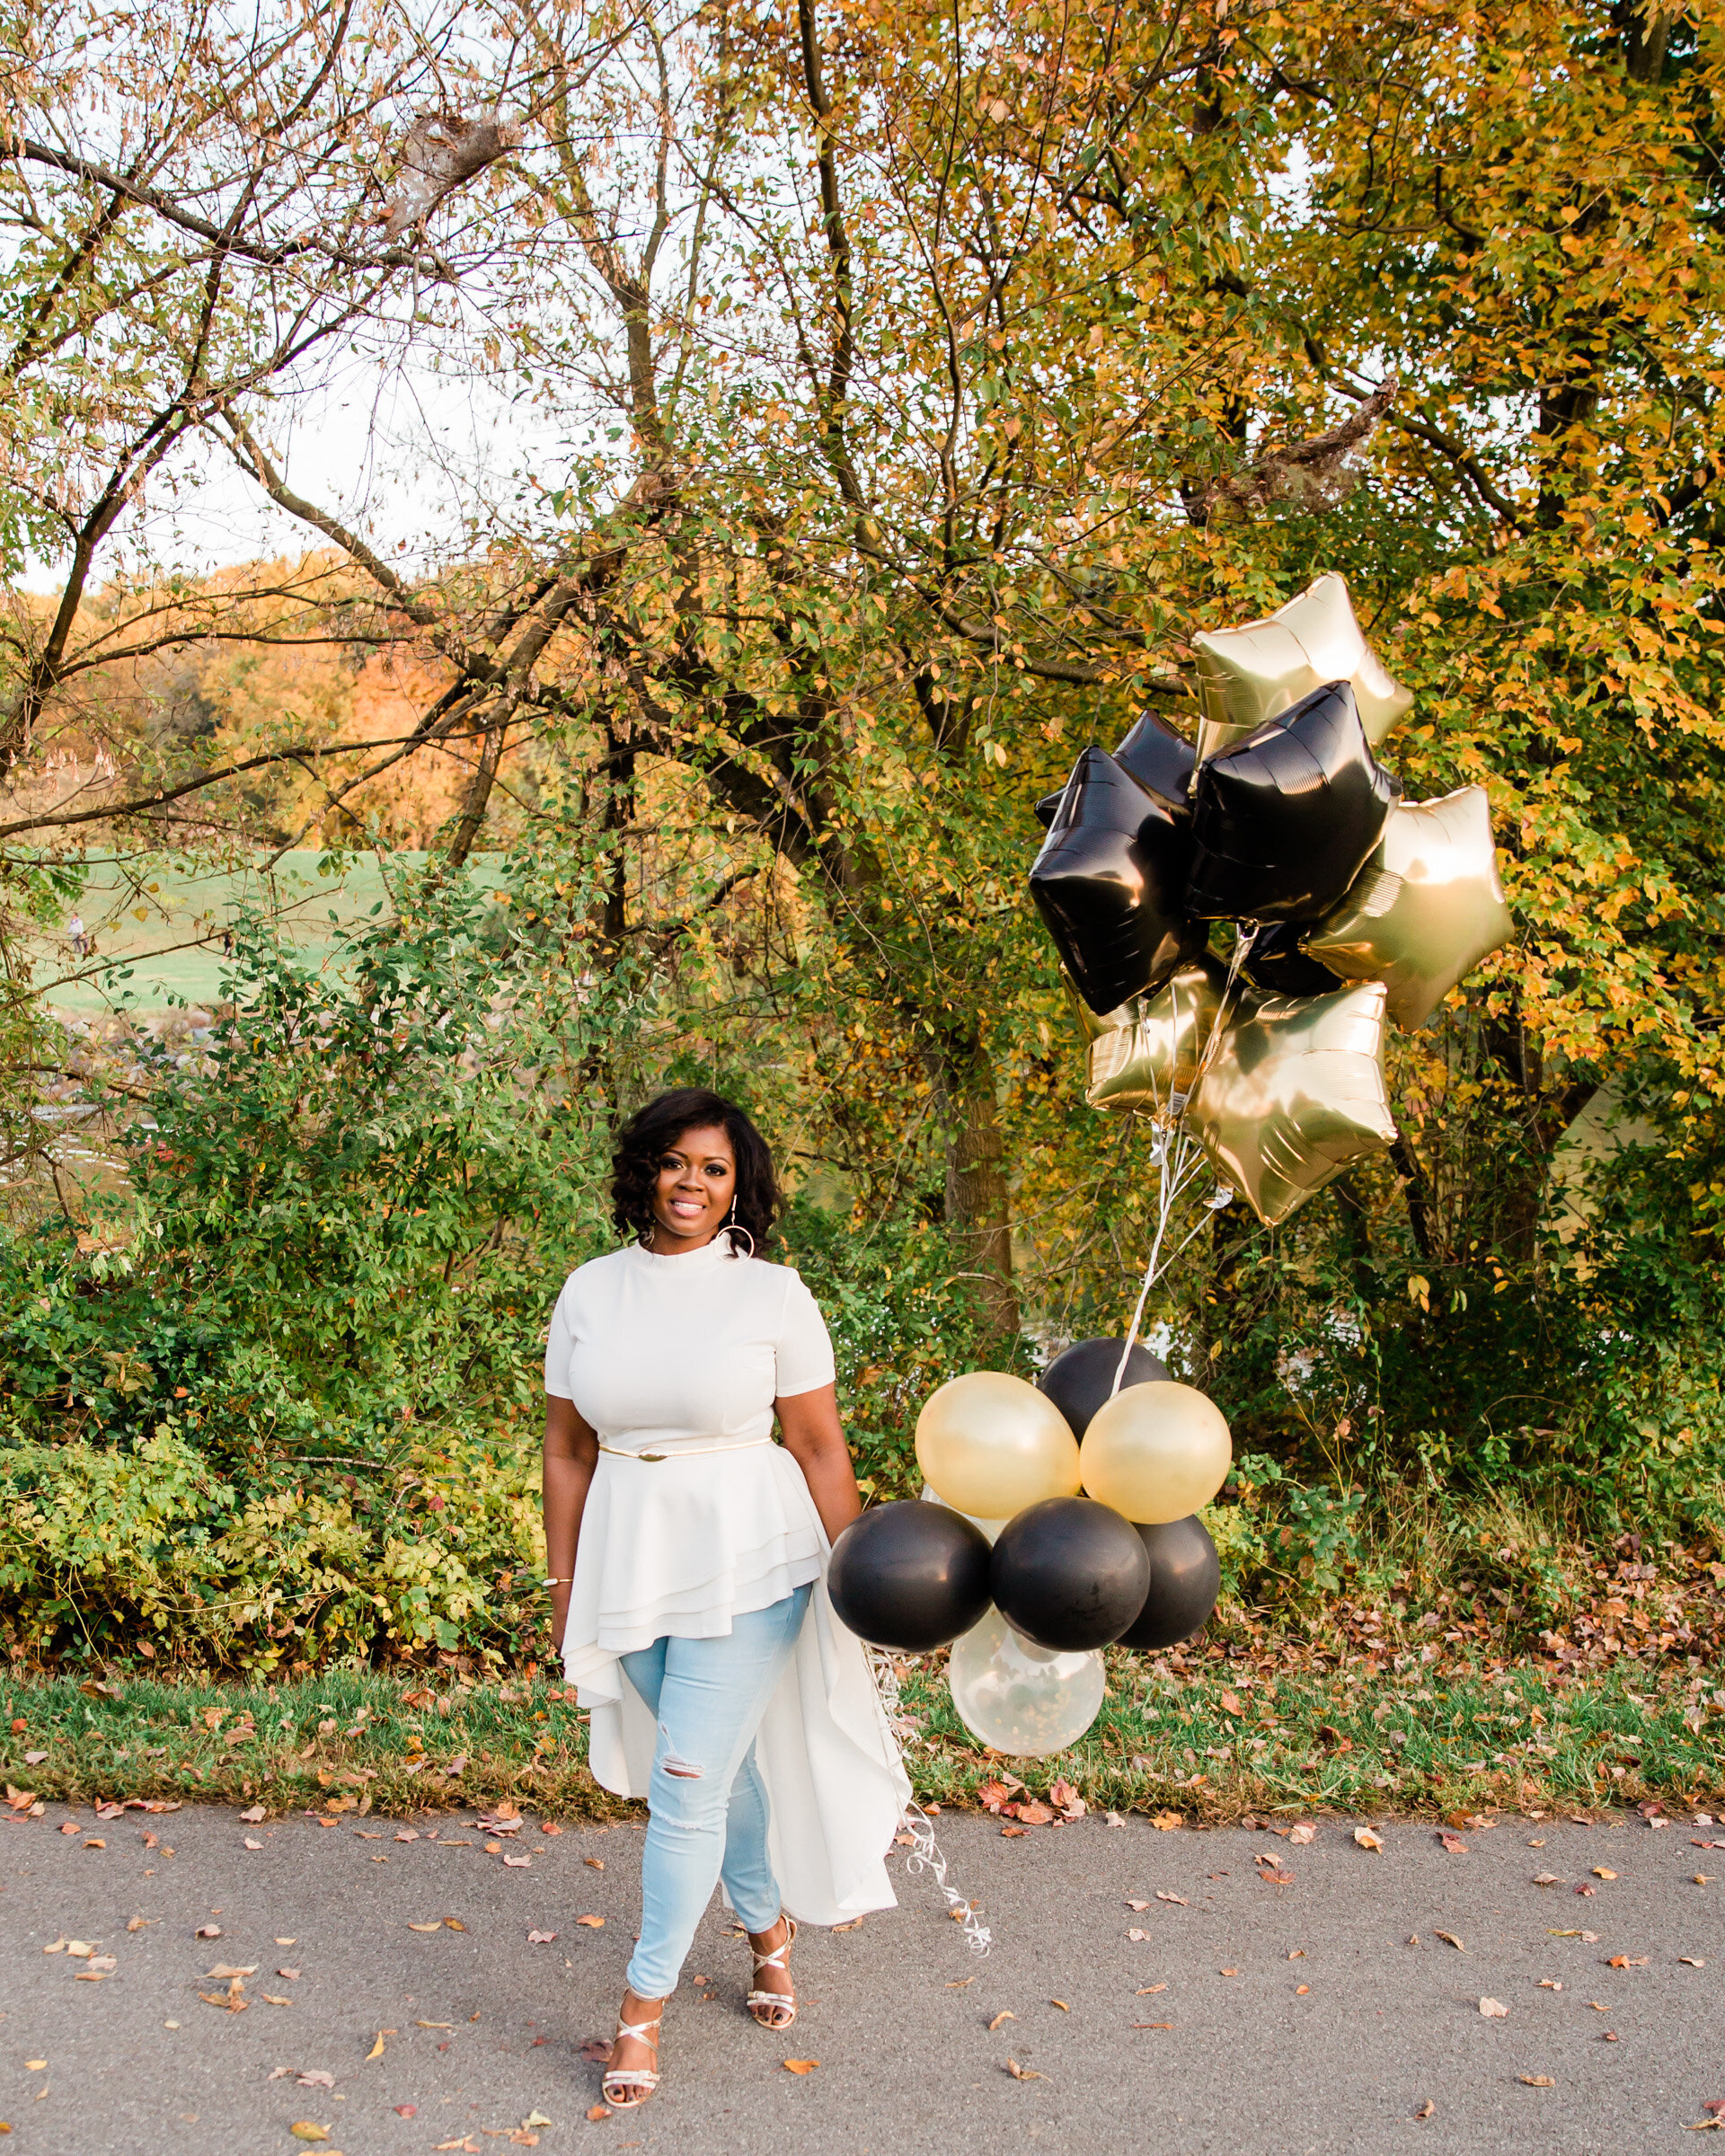 Black Female Portrait Photographer in Baltimore 40t Birthday Photoshoot by Megapixels Media Photography-56.jpg